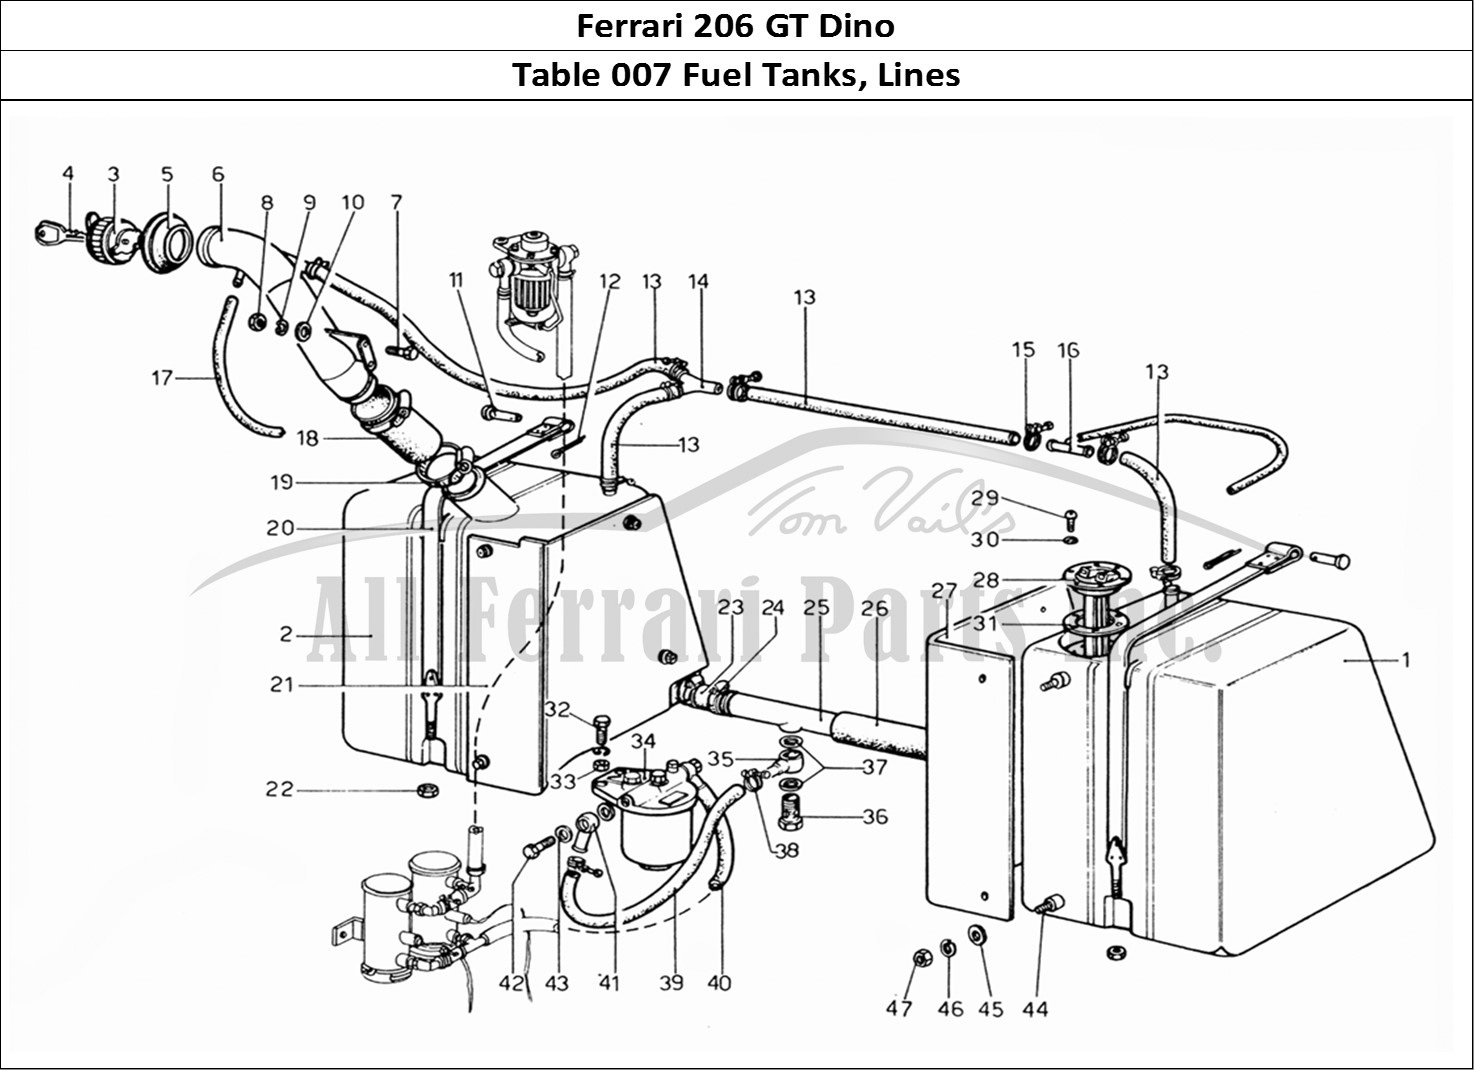 Ferrari Parts Ferrari 206 GT Dino (1969) Page 007 Fuel Tanks -and Pipes